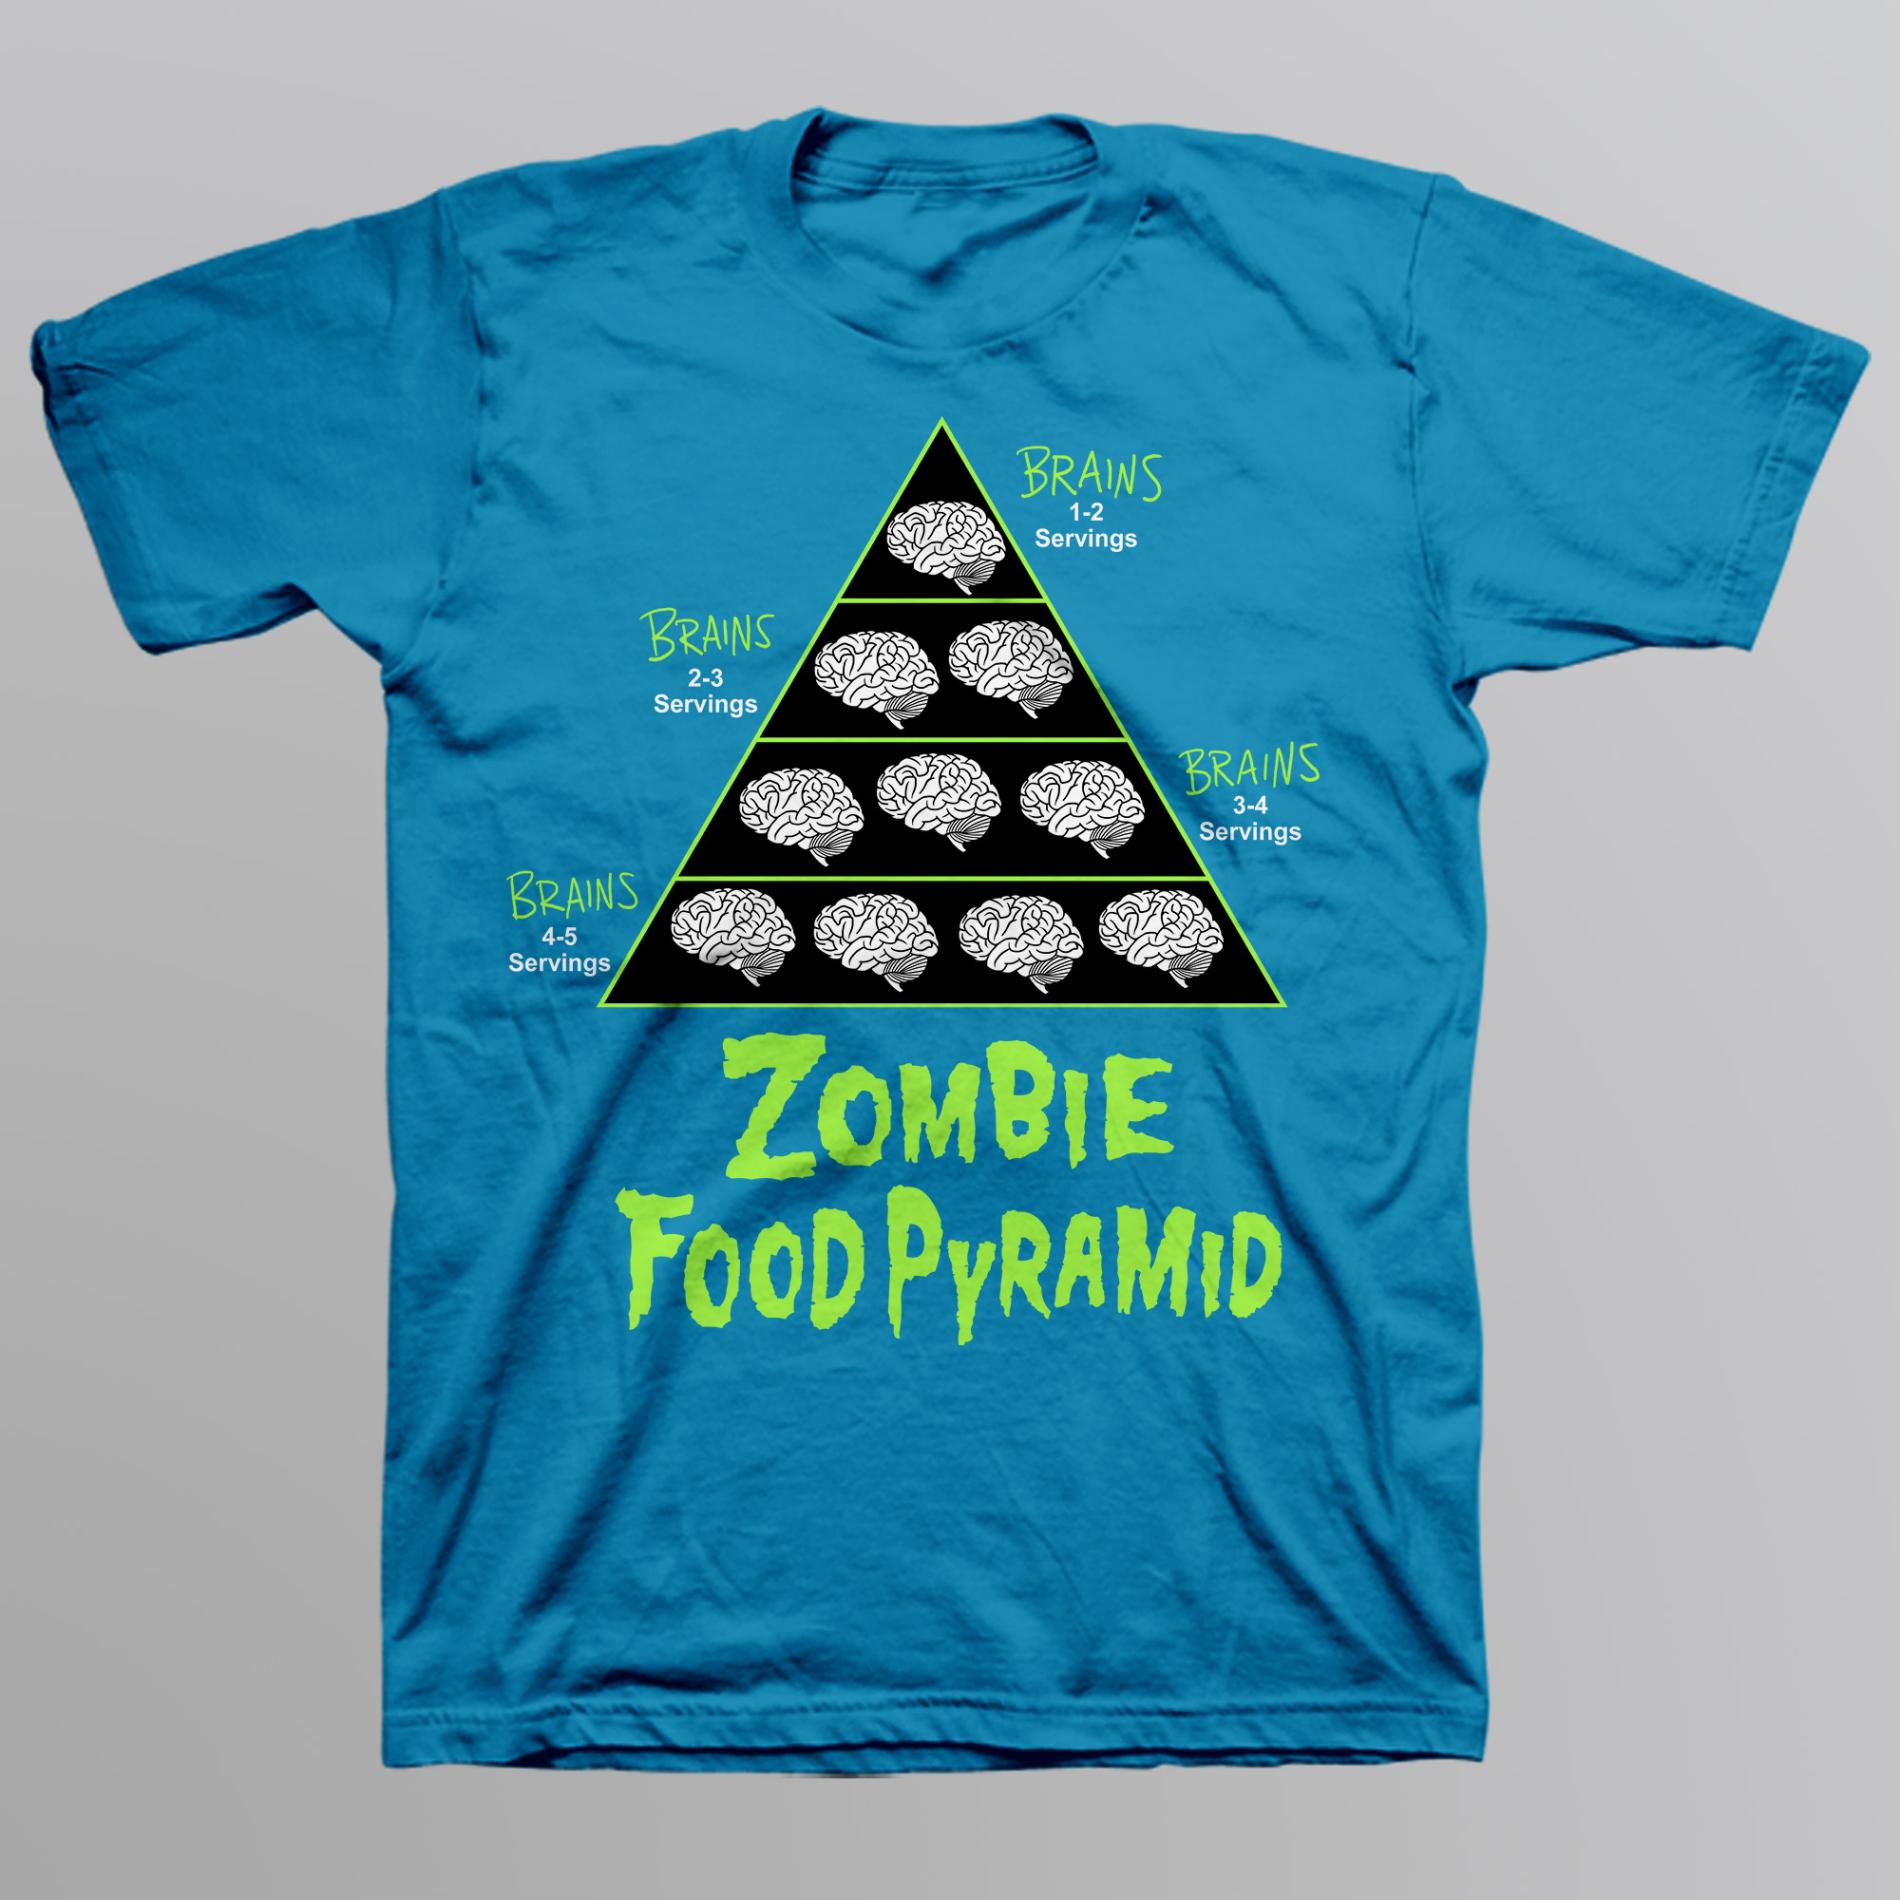 Route 66 Boy's Graphic T-Shirt - Zombie Diet